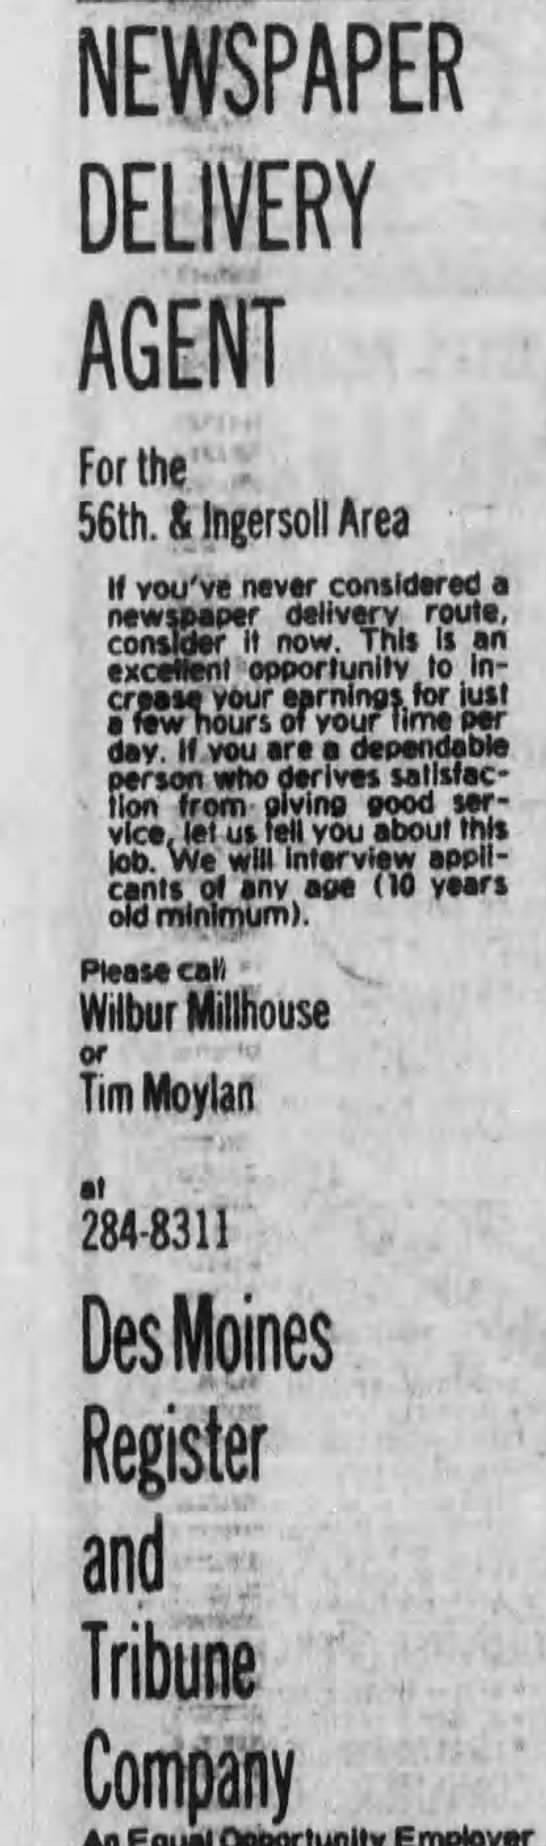 9/7/82 Tim Moylan and Millhouse - 